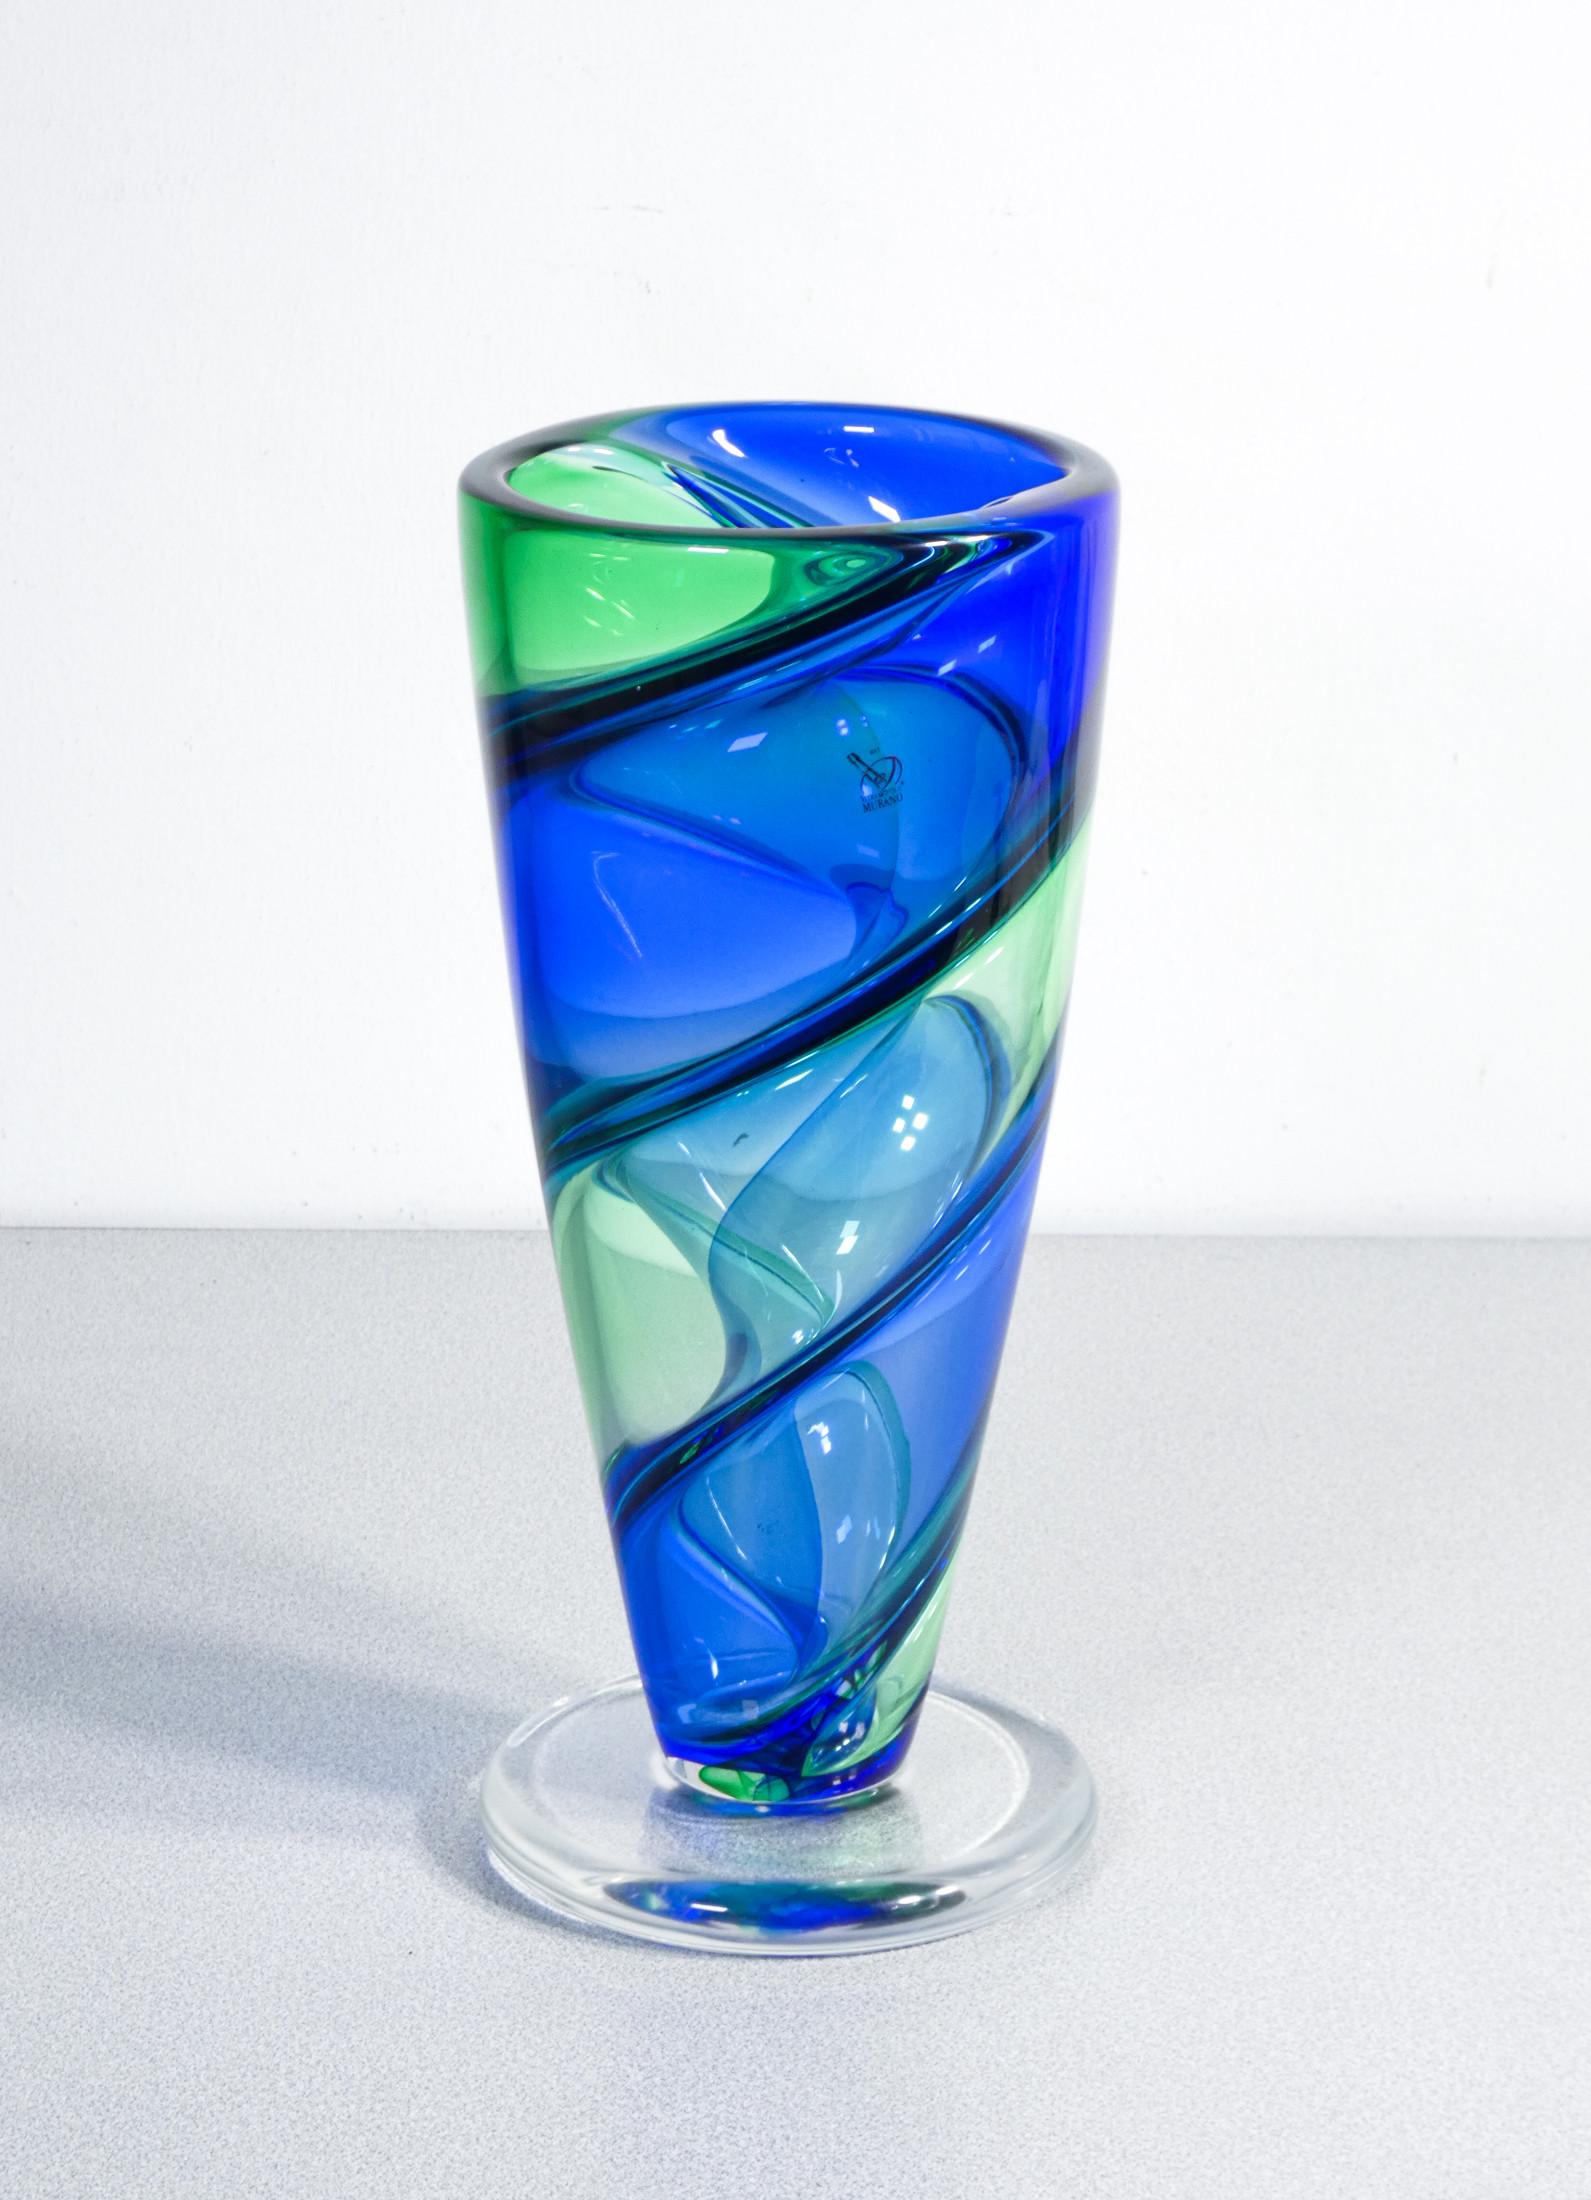 Blown glass vase
Furnace MIAN
